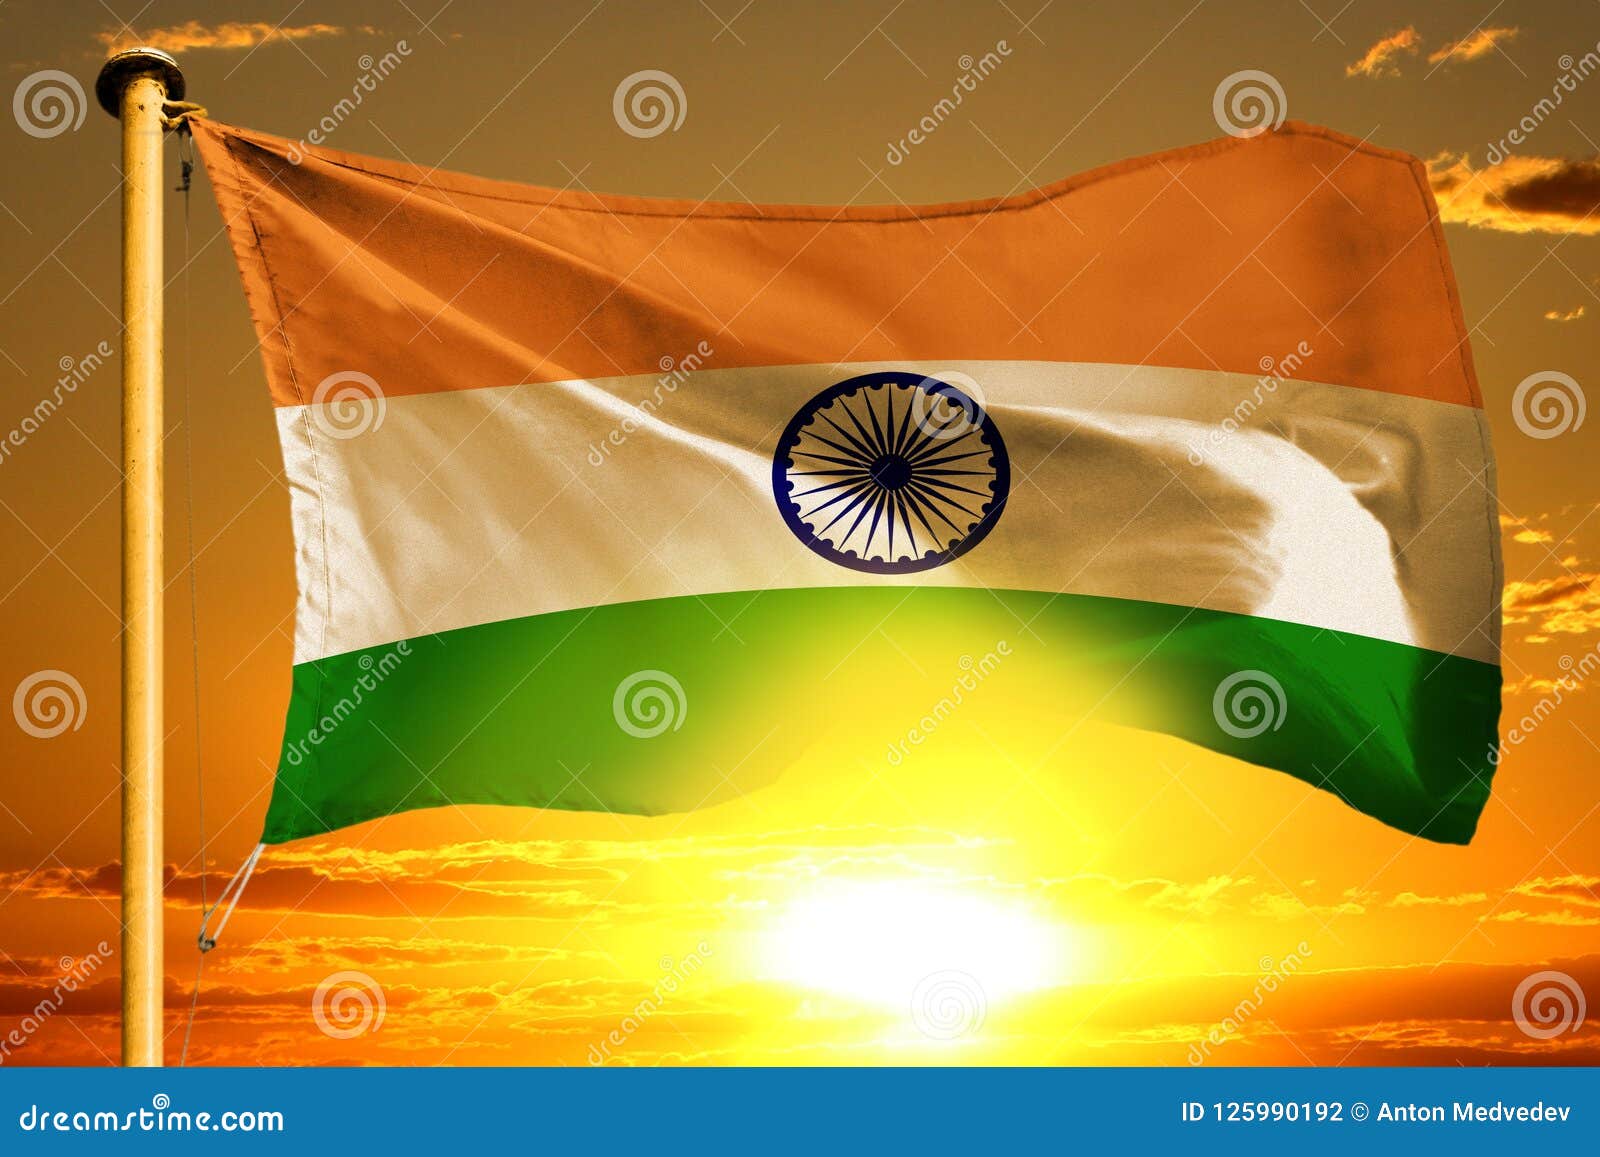 India Flag Weaving on the Beautiful Orange Sunset with Clouds Background  Stock Photo - Image of patriotic, sunrise: 125990192